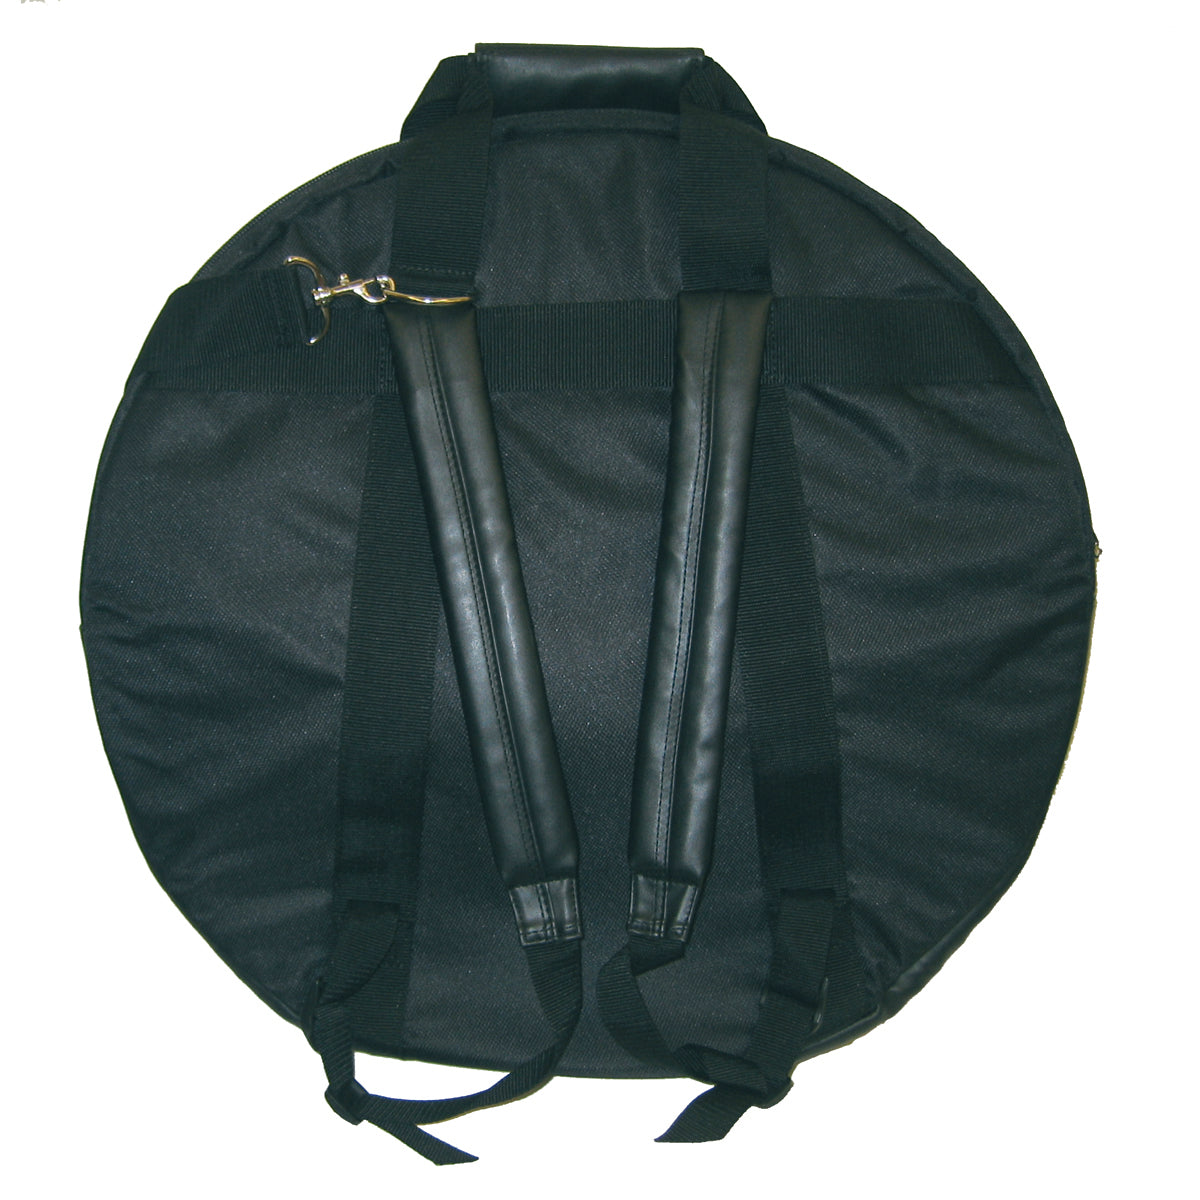 Paiste 22" Professional Cymbal Bag